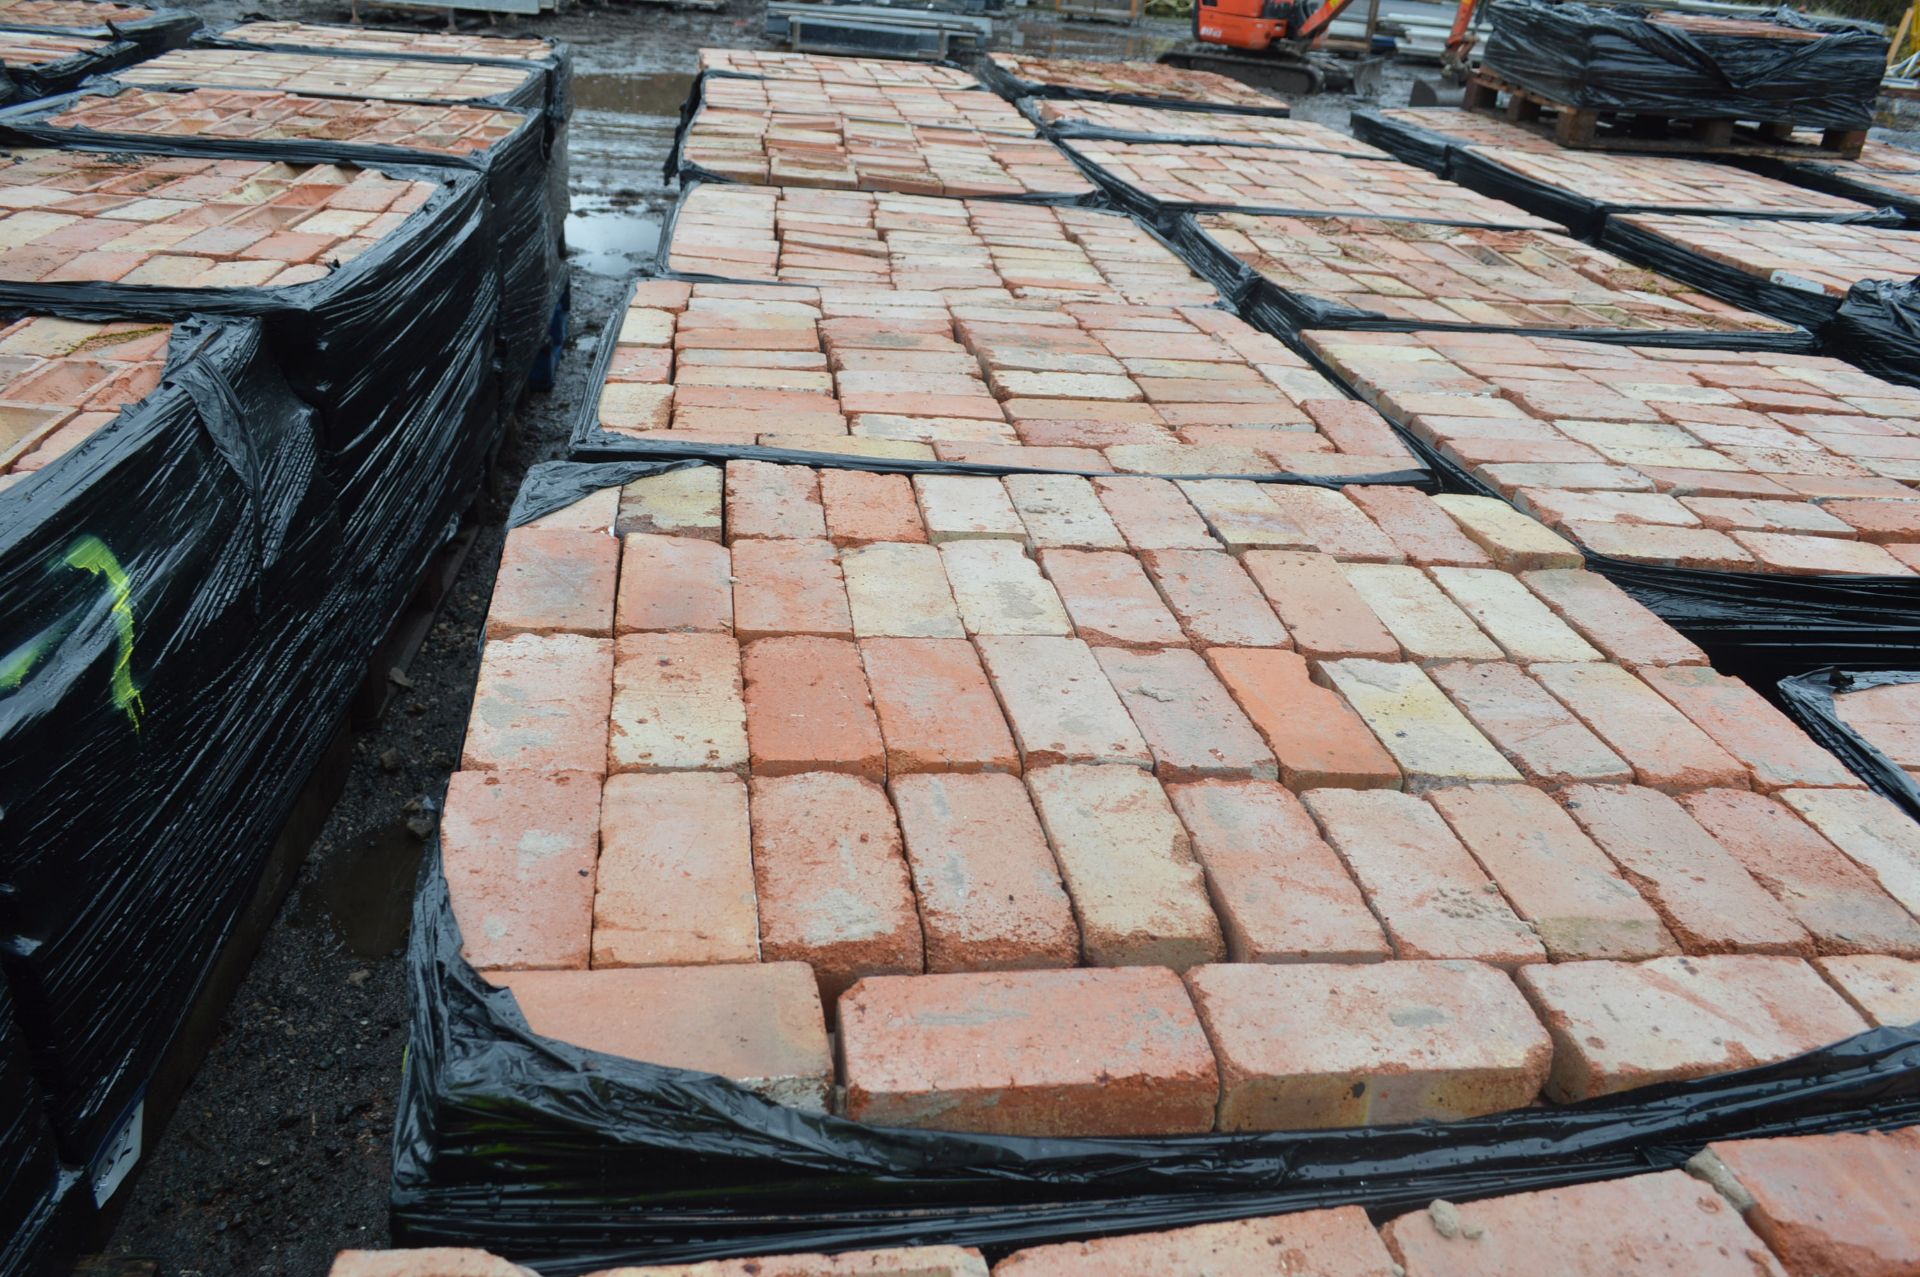 Bricks, on six pallets - Image 2 of 8